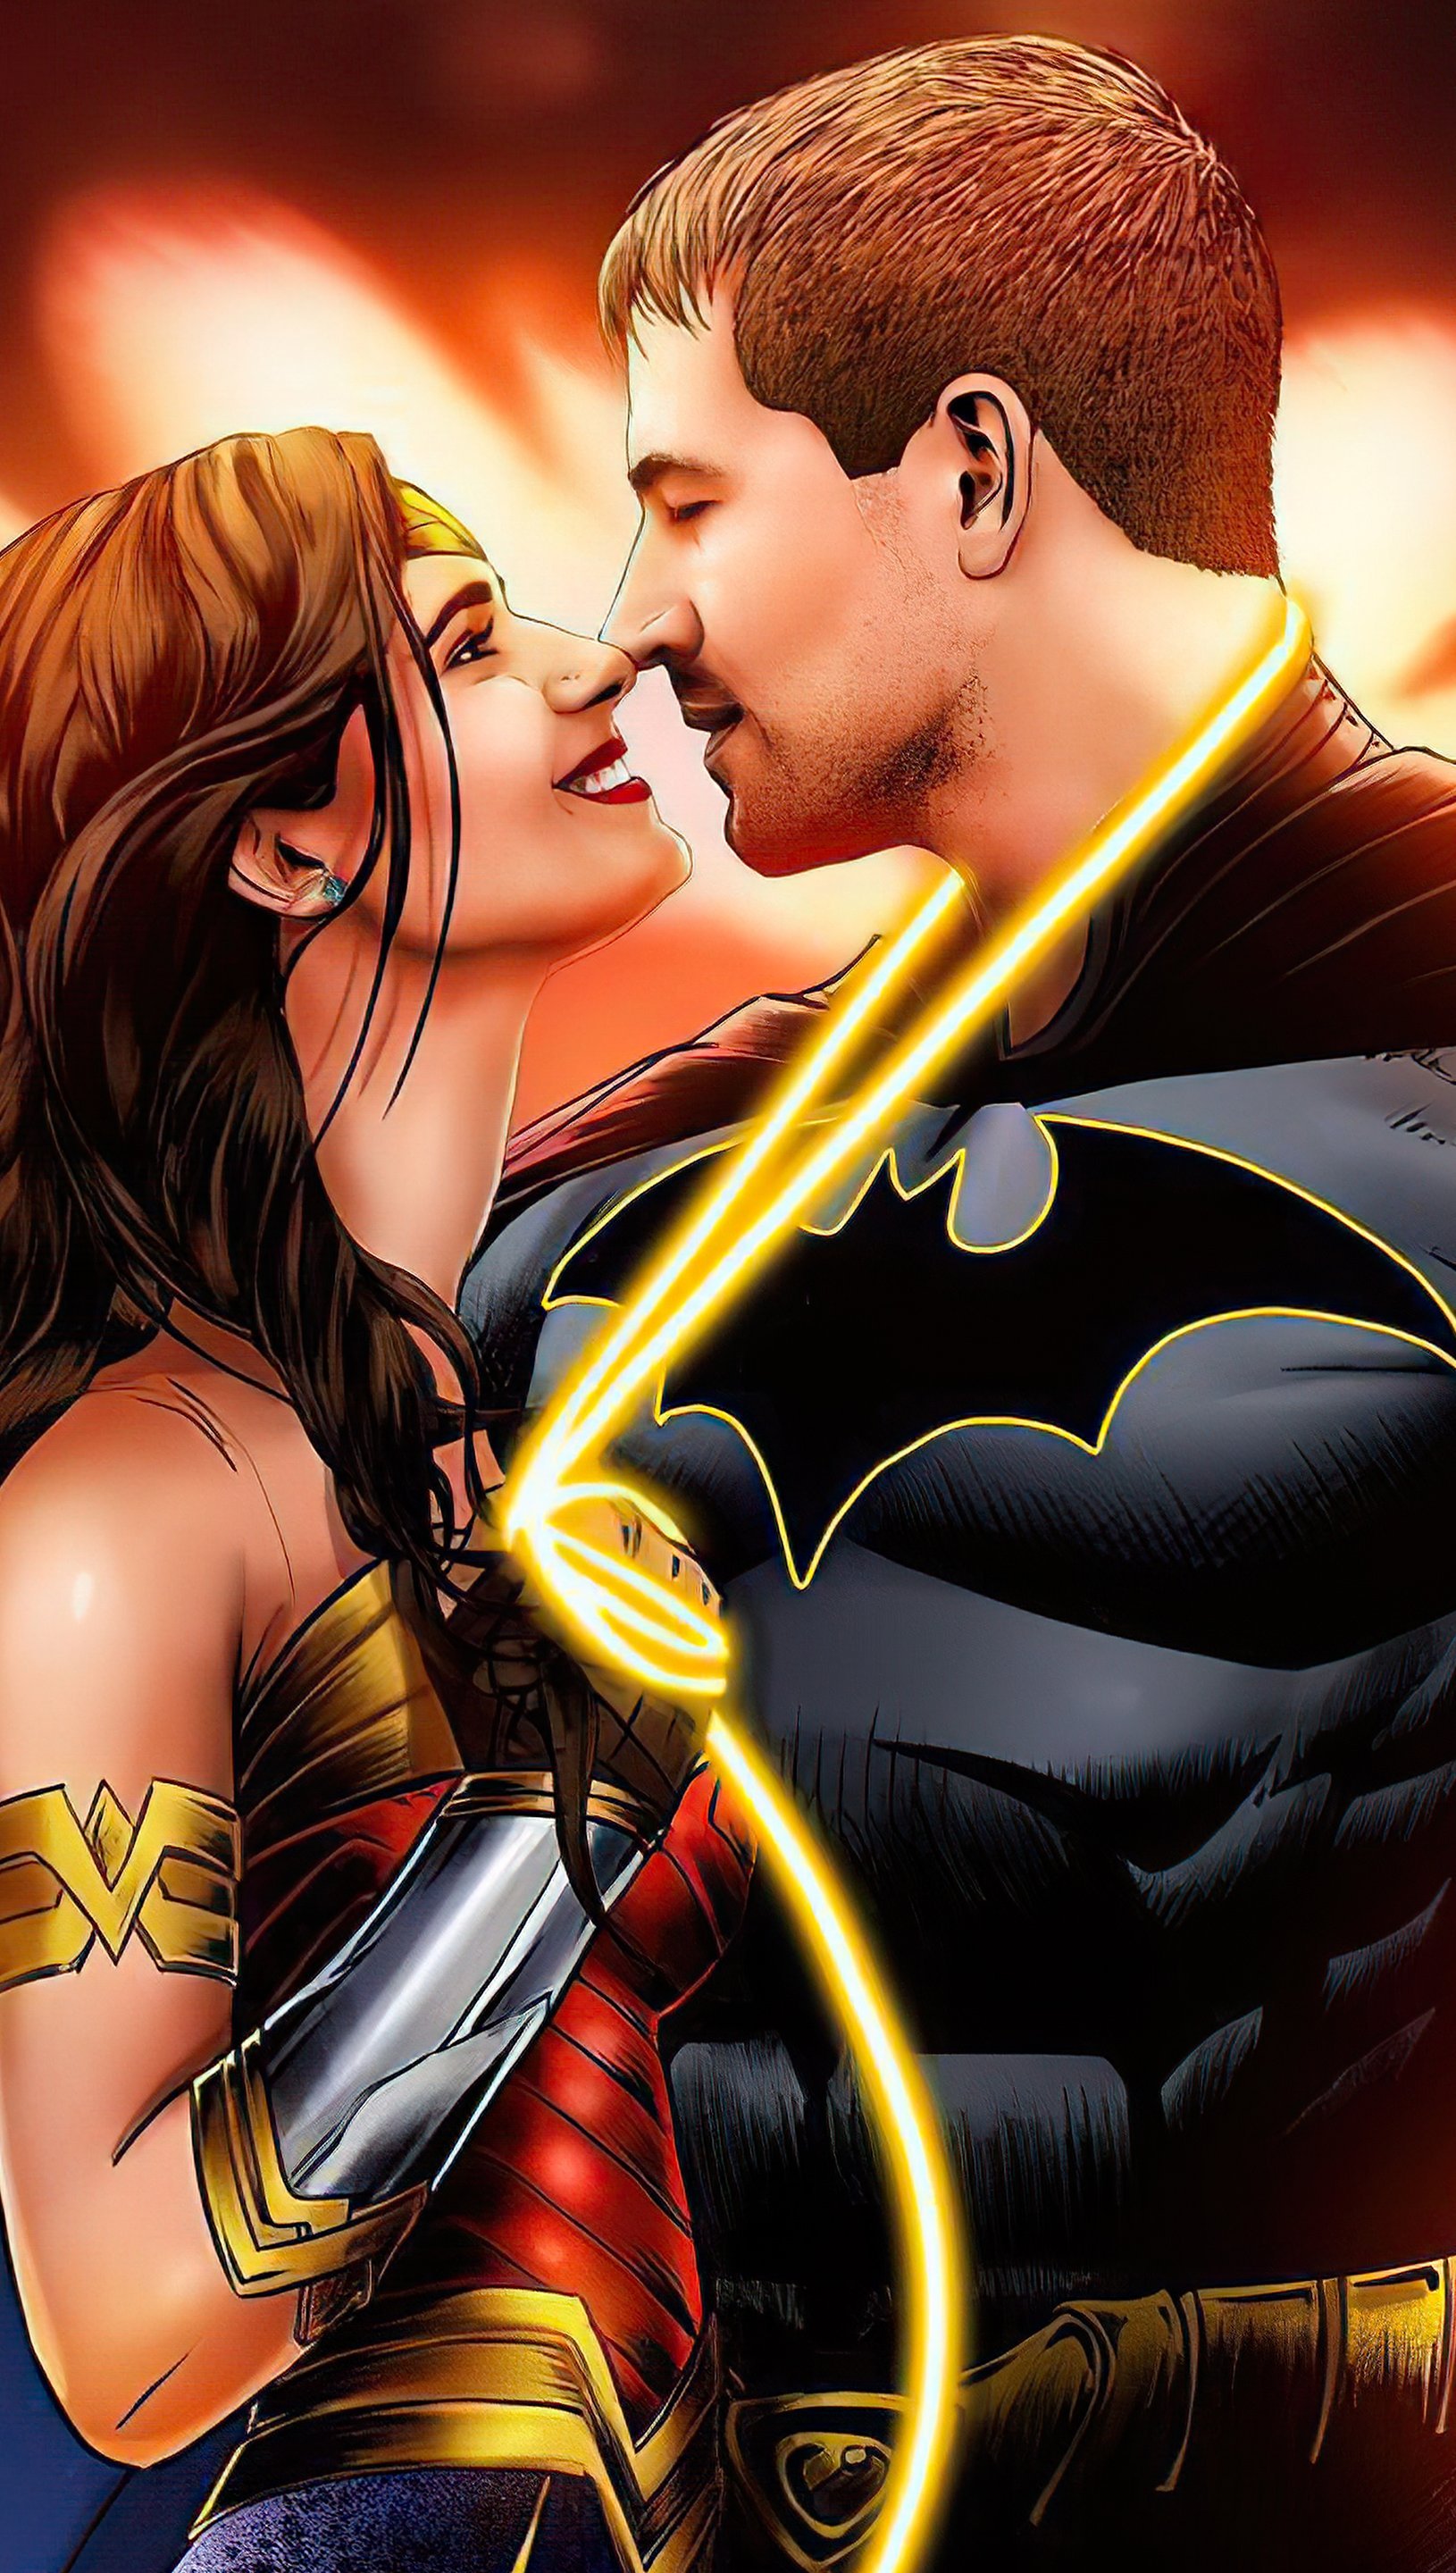 Wallpaper Batman and Wonder Woman in love Vertical